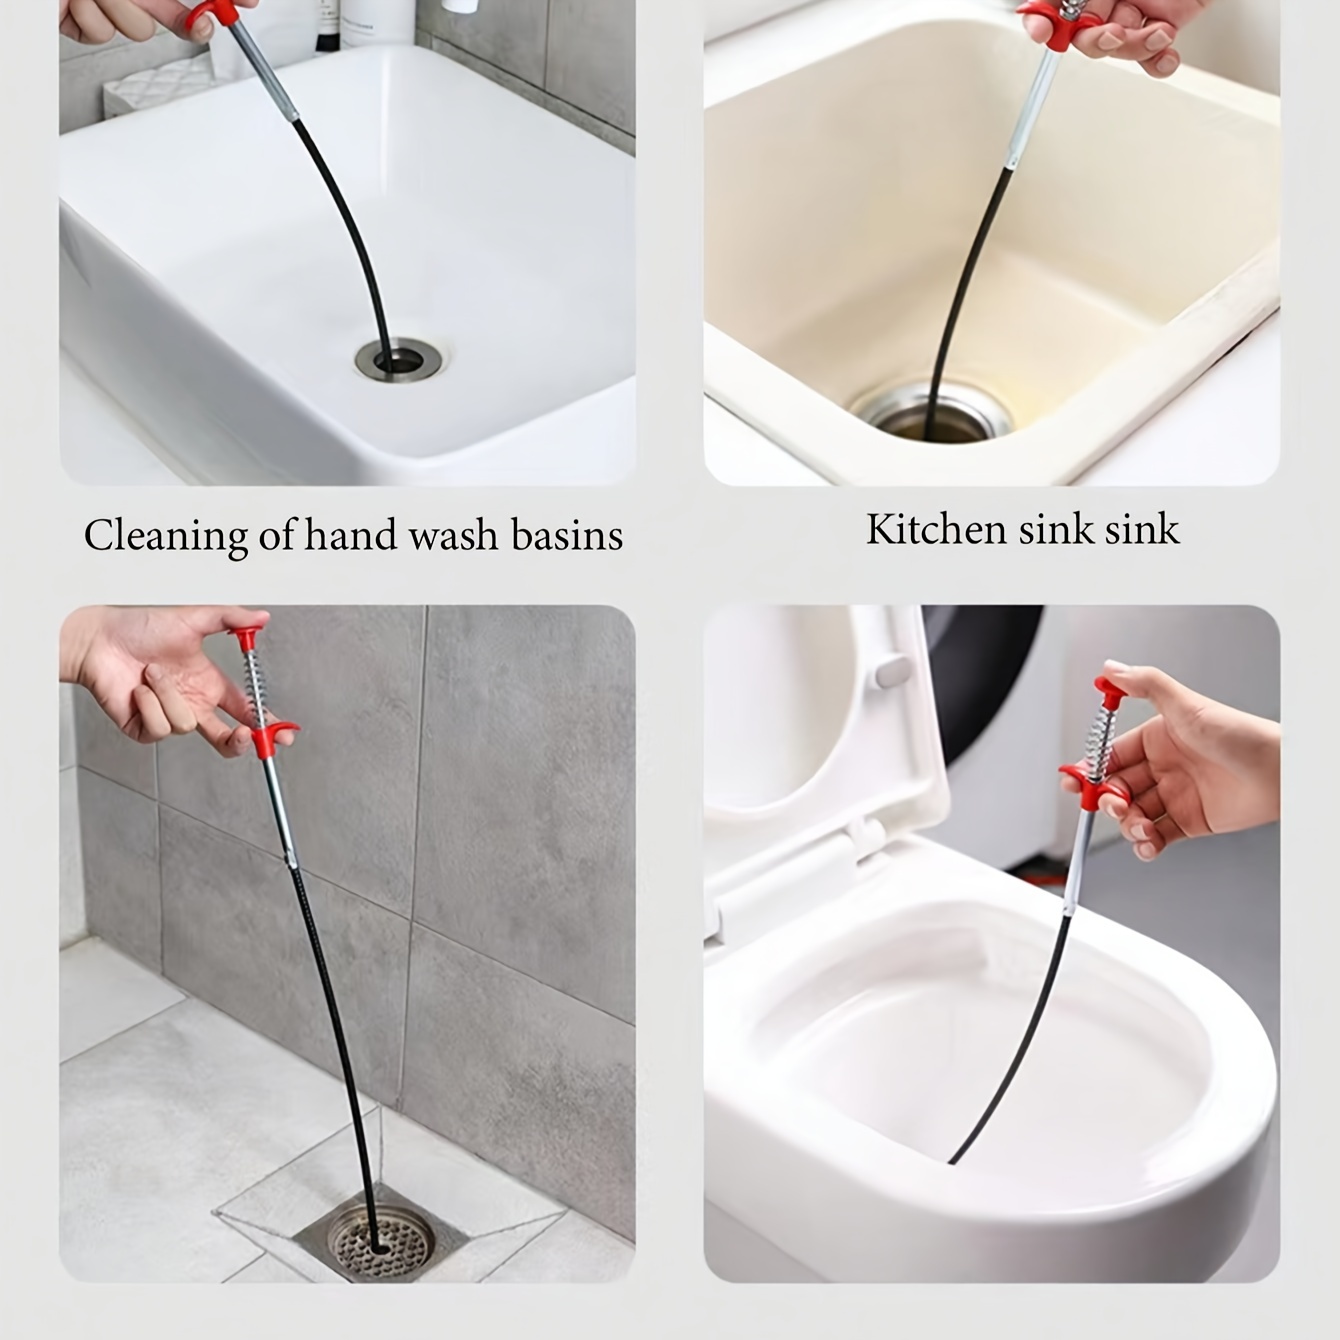 Pipe Dredging Brush Bathroom Hair Sewer Sink Cleaning Pipe Dredger Drain  Cleaner Hook Dredging Floor Hair Remover Toilet Tool